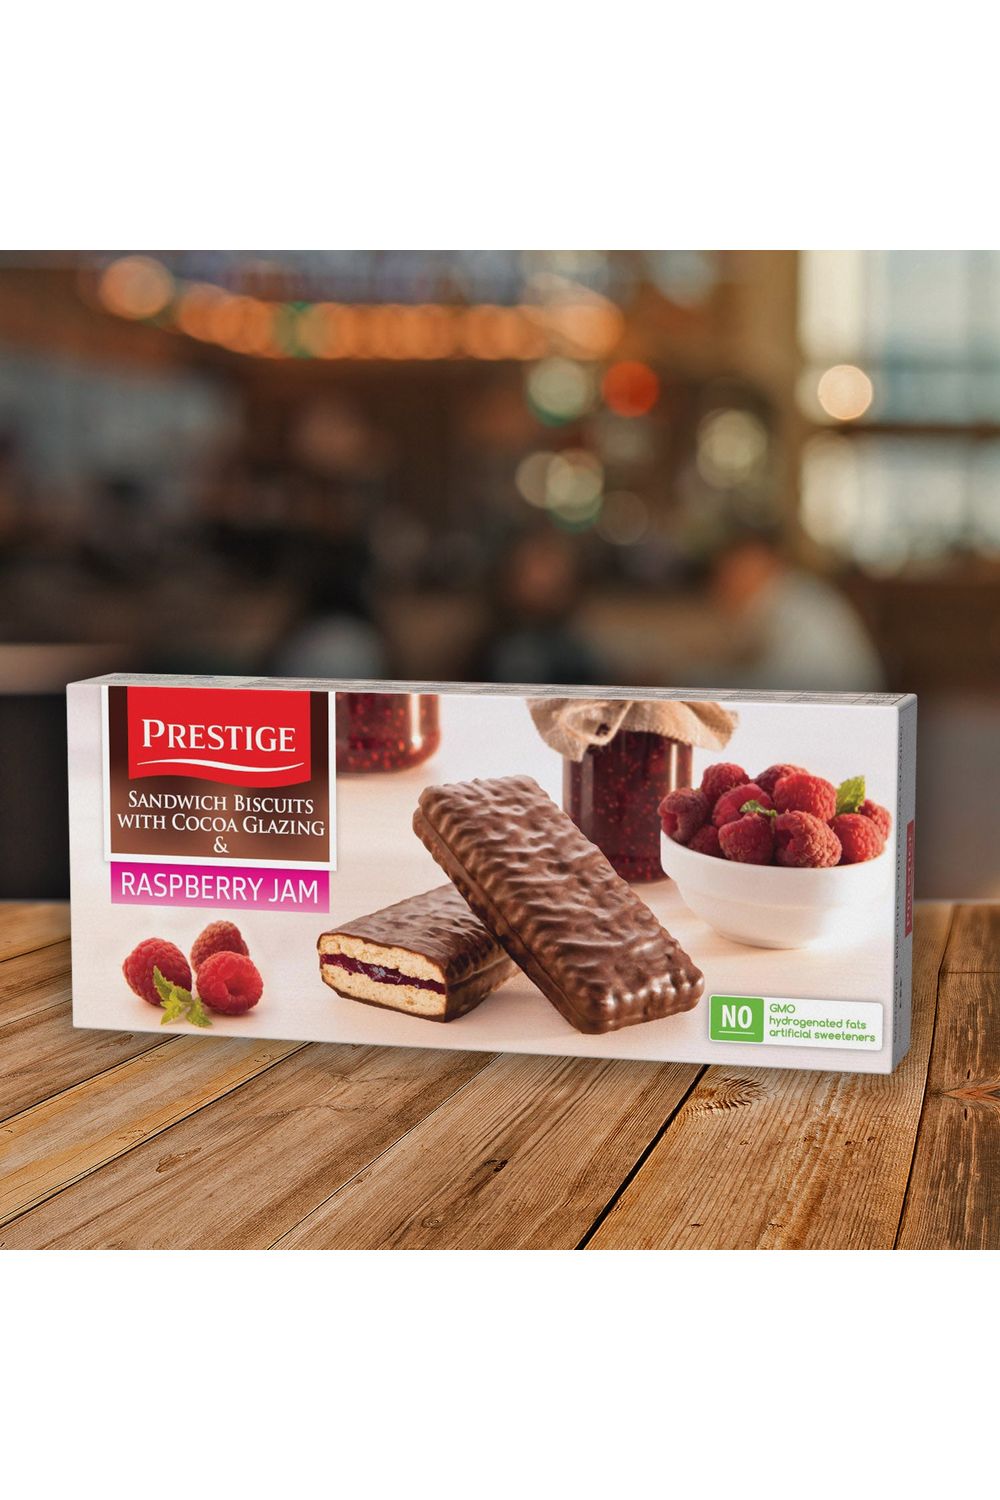 Prestige Sandwich Biscuits with Cocoa Glazing & Raspberry Jam